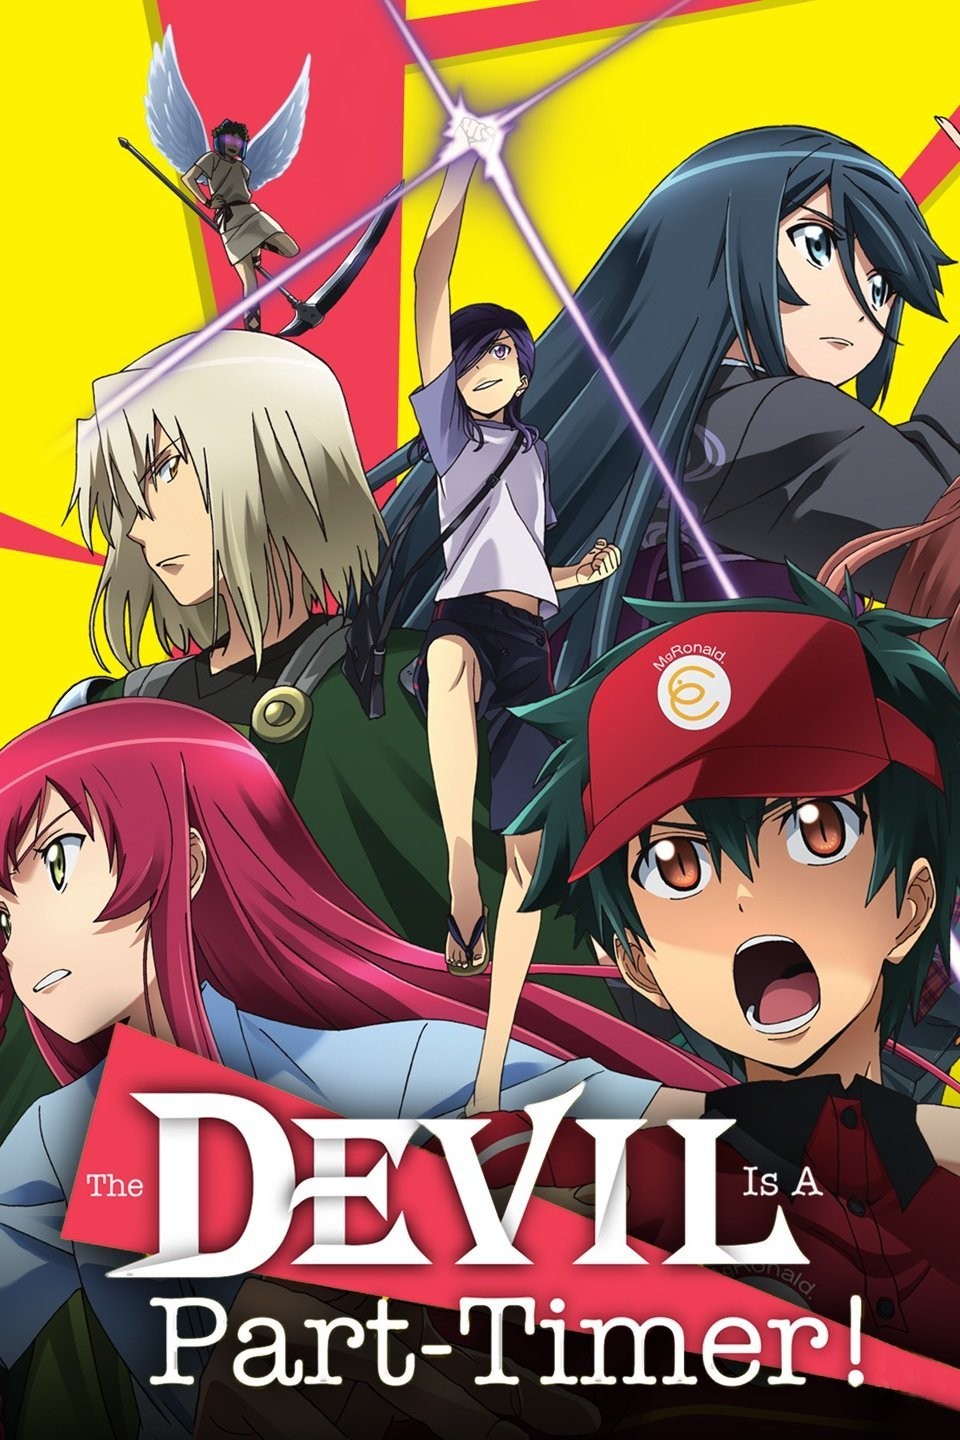 The Devil is a Part-Timer 2 OP - Hikari no Nai Machi 光のない街 : r/animemusic